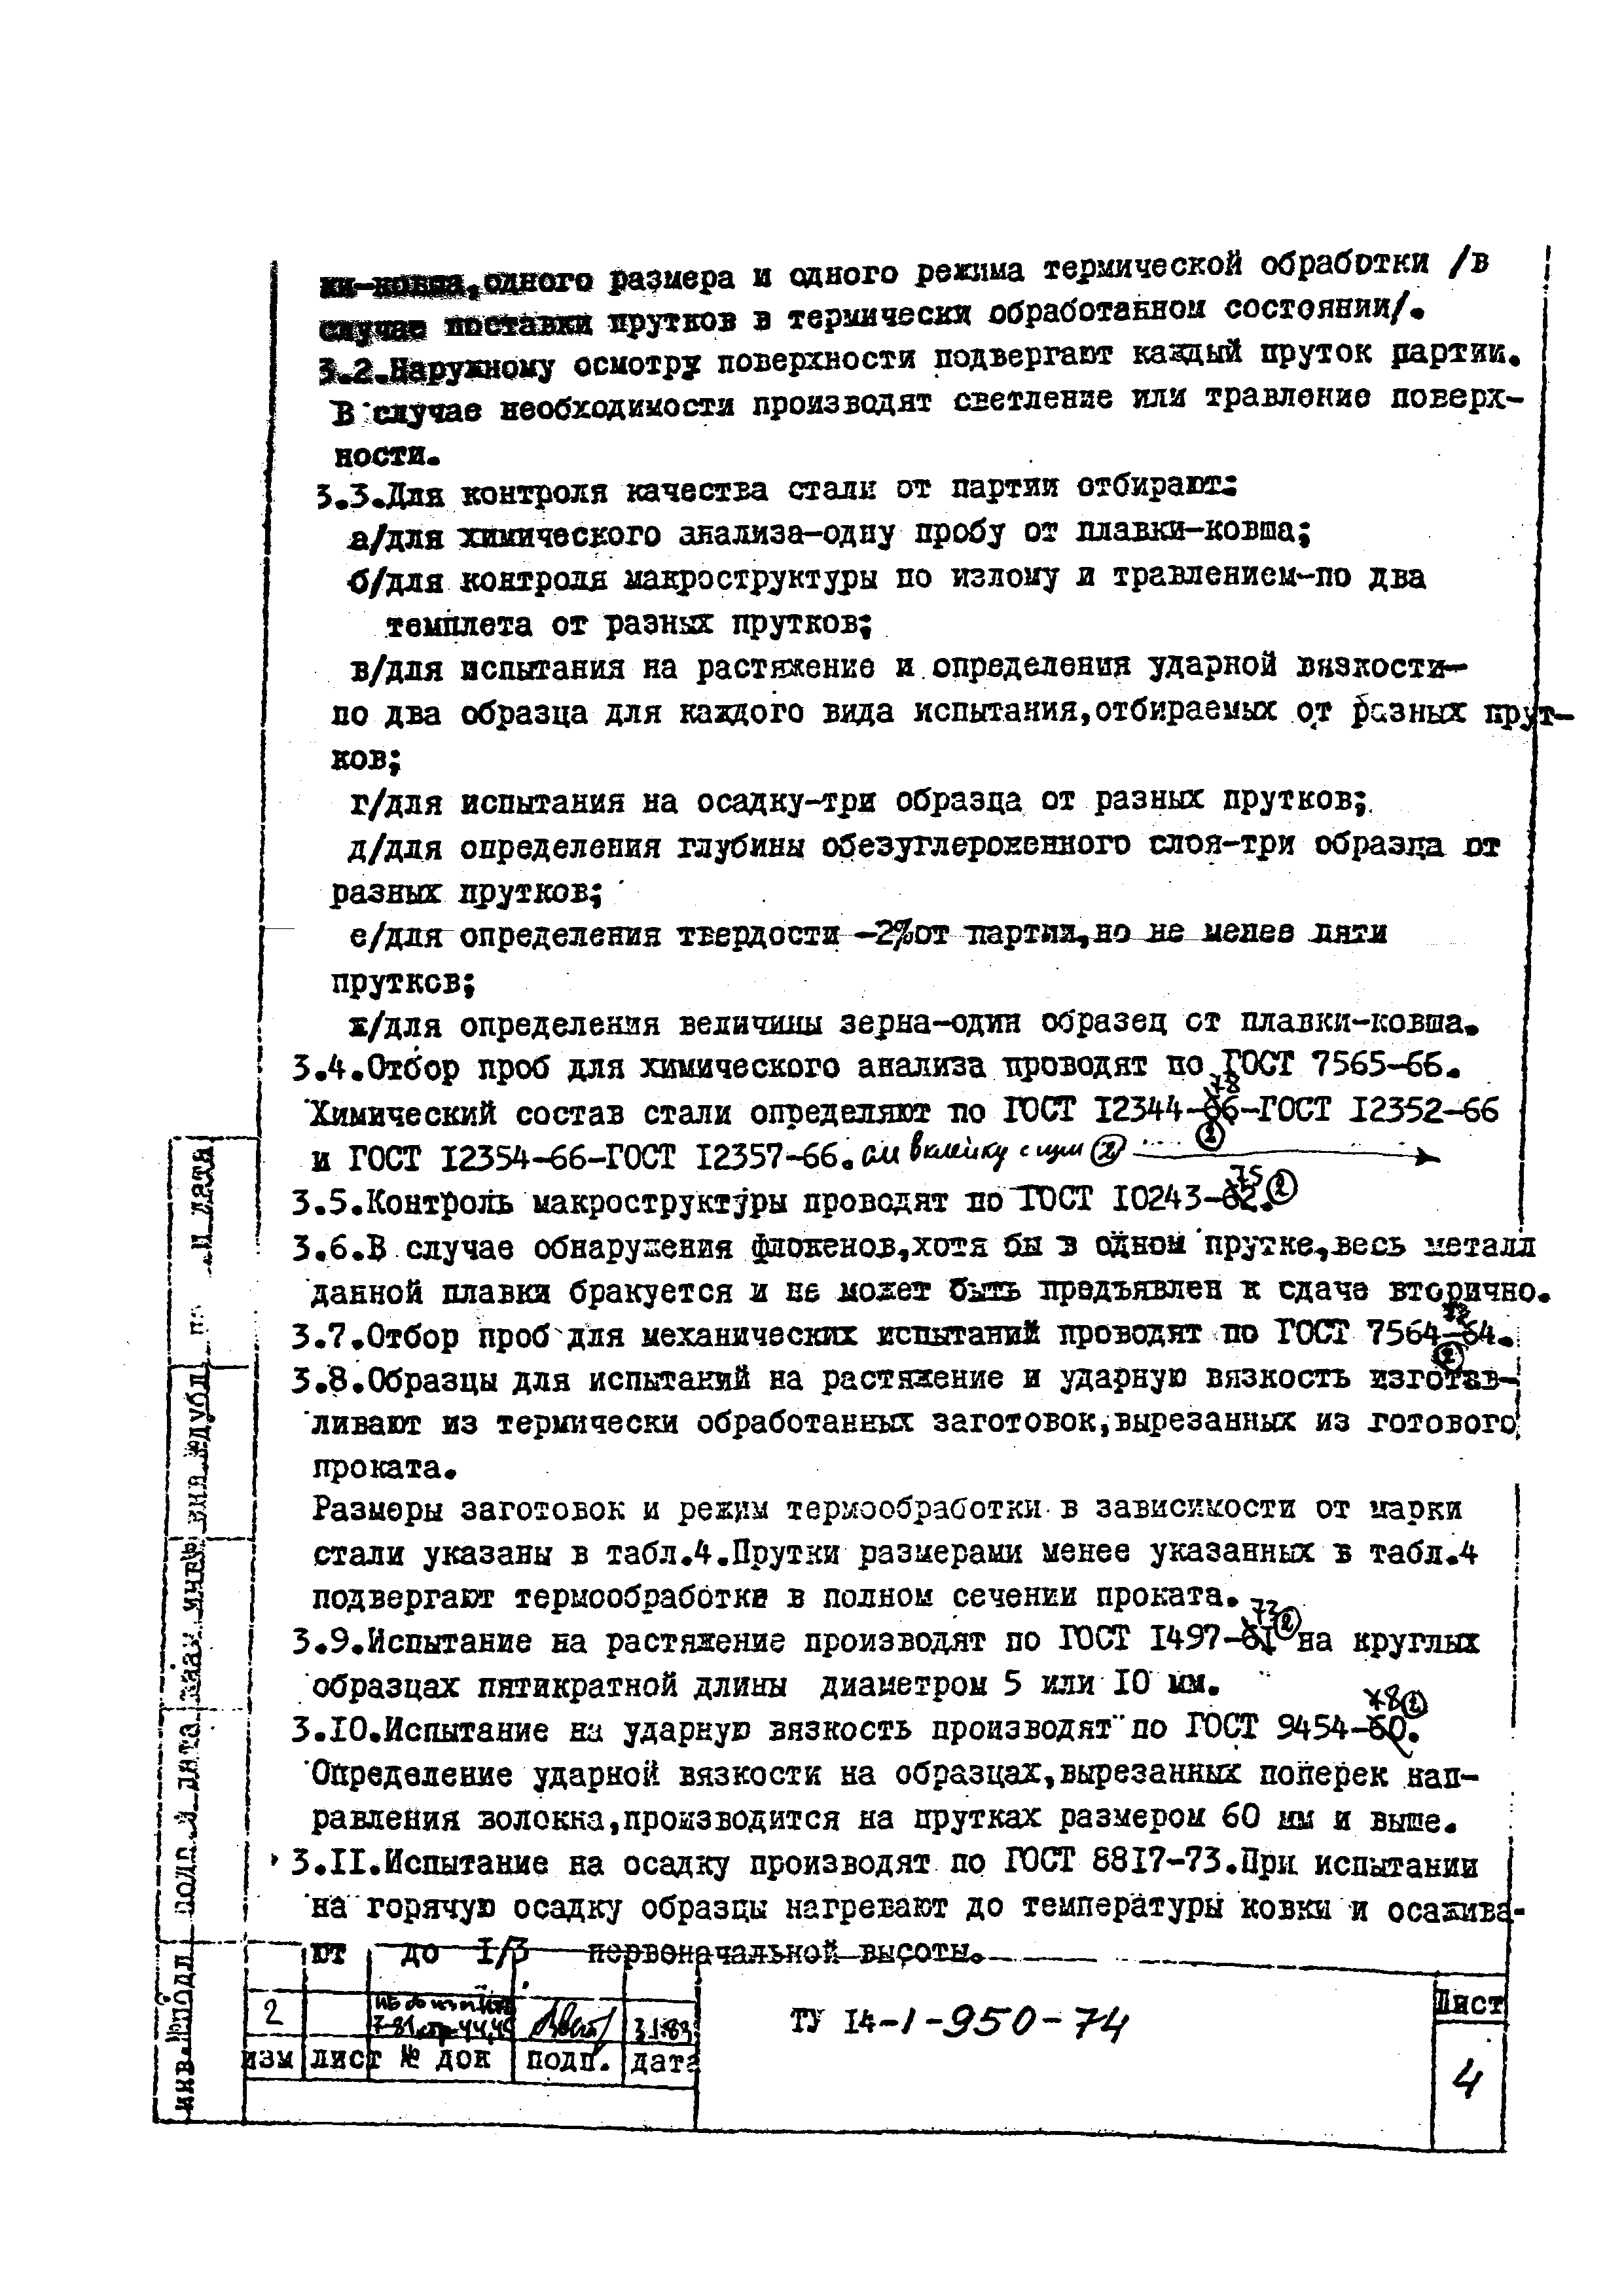 ТУ 14-1-950-74